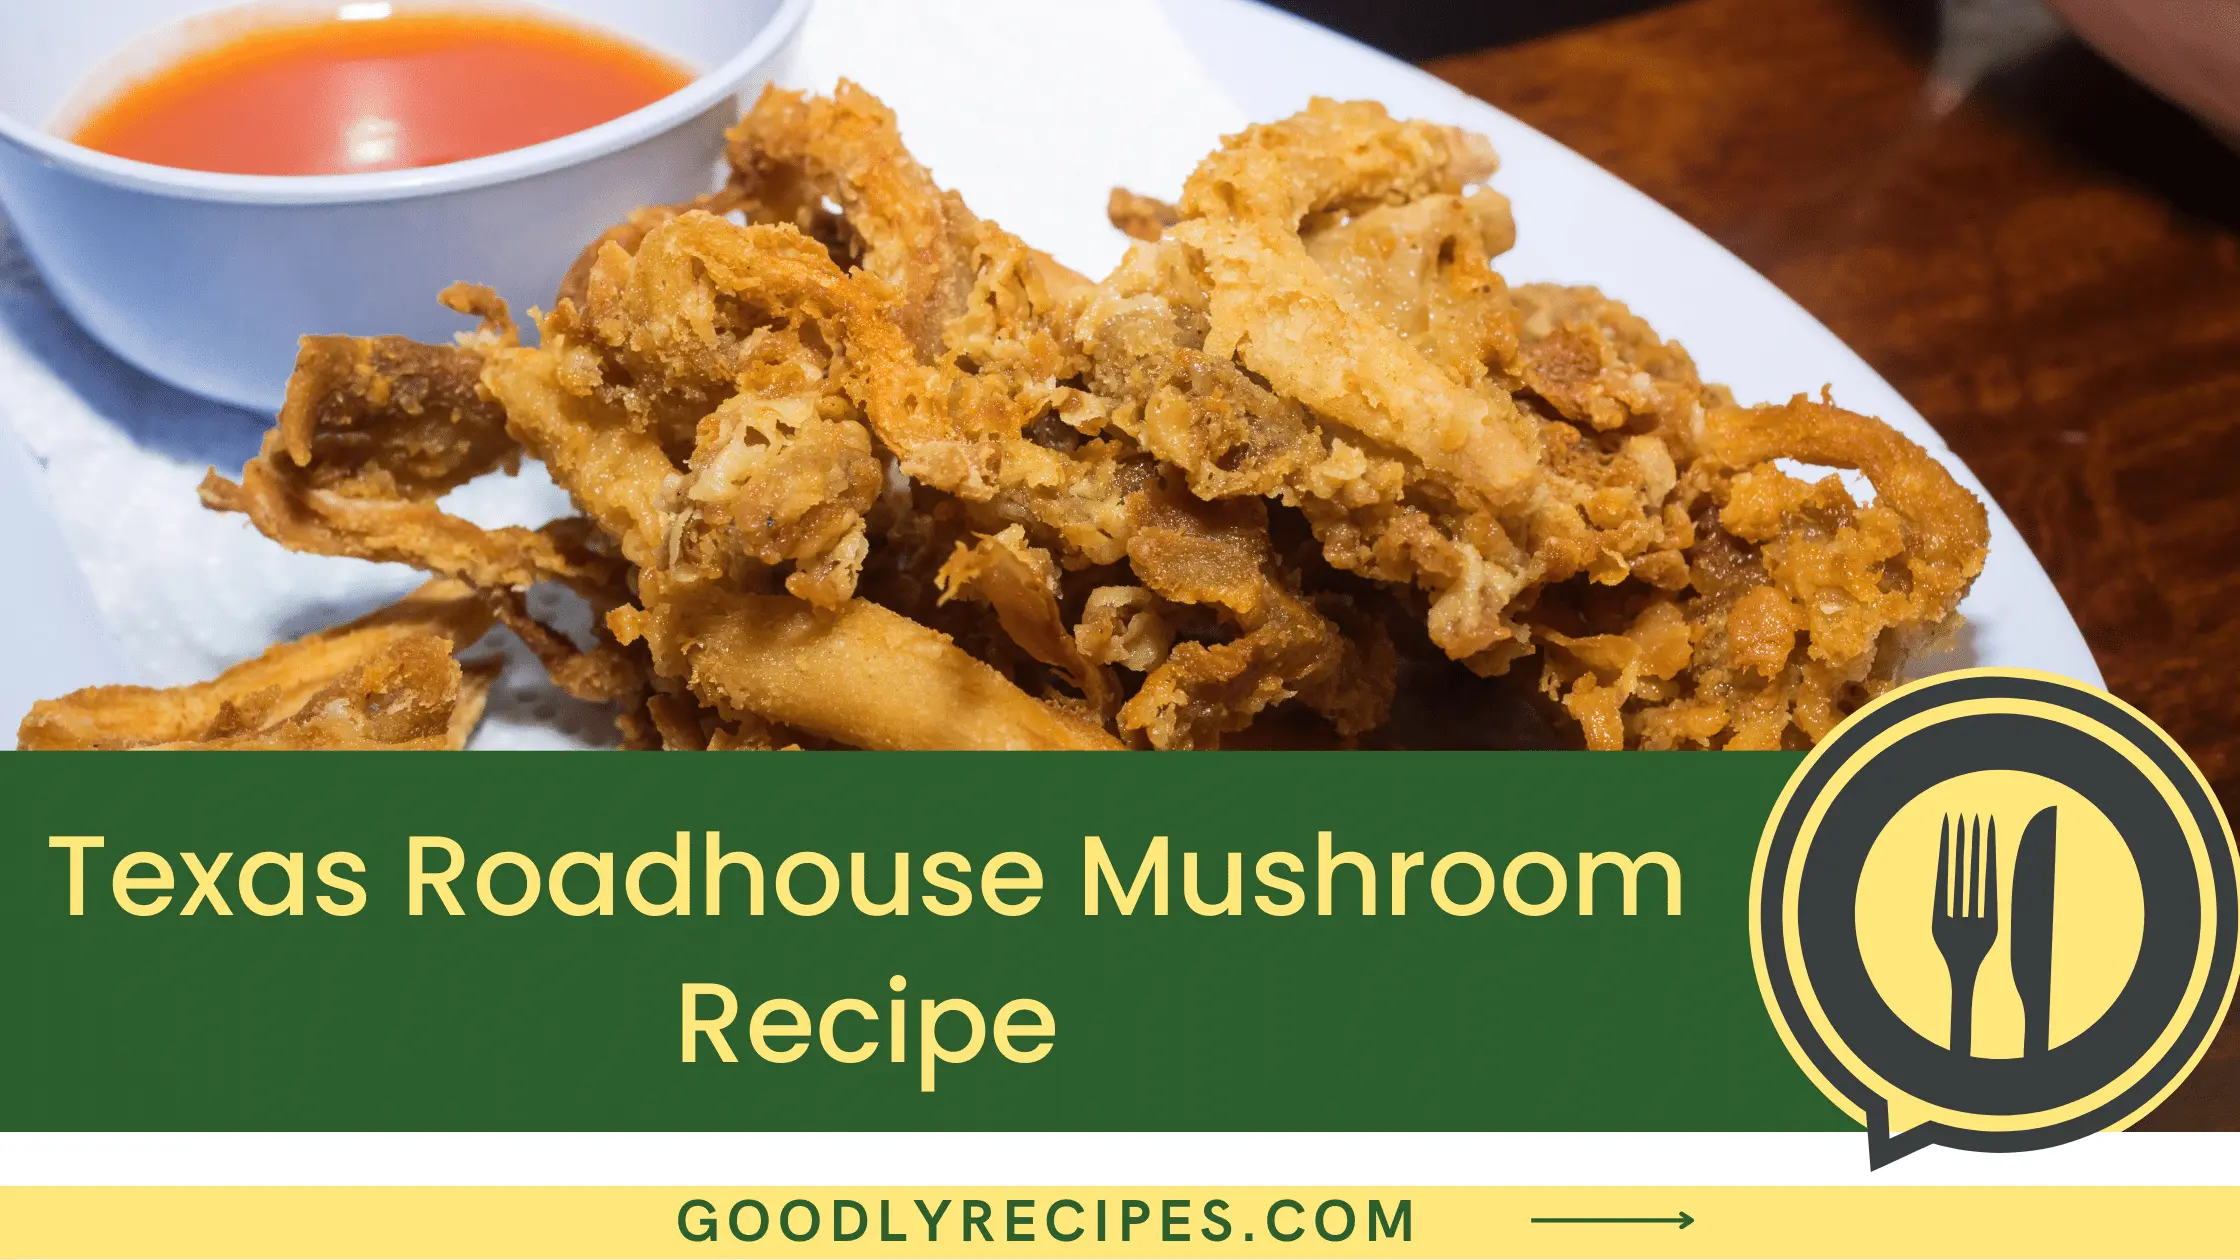 What is Texas Roadhouse Mushroom Recipe?